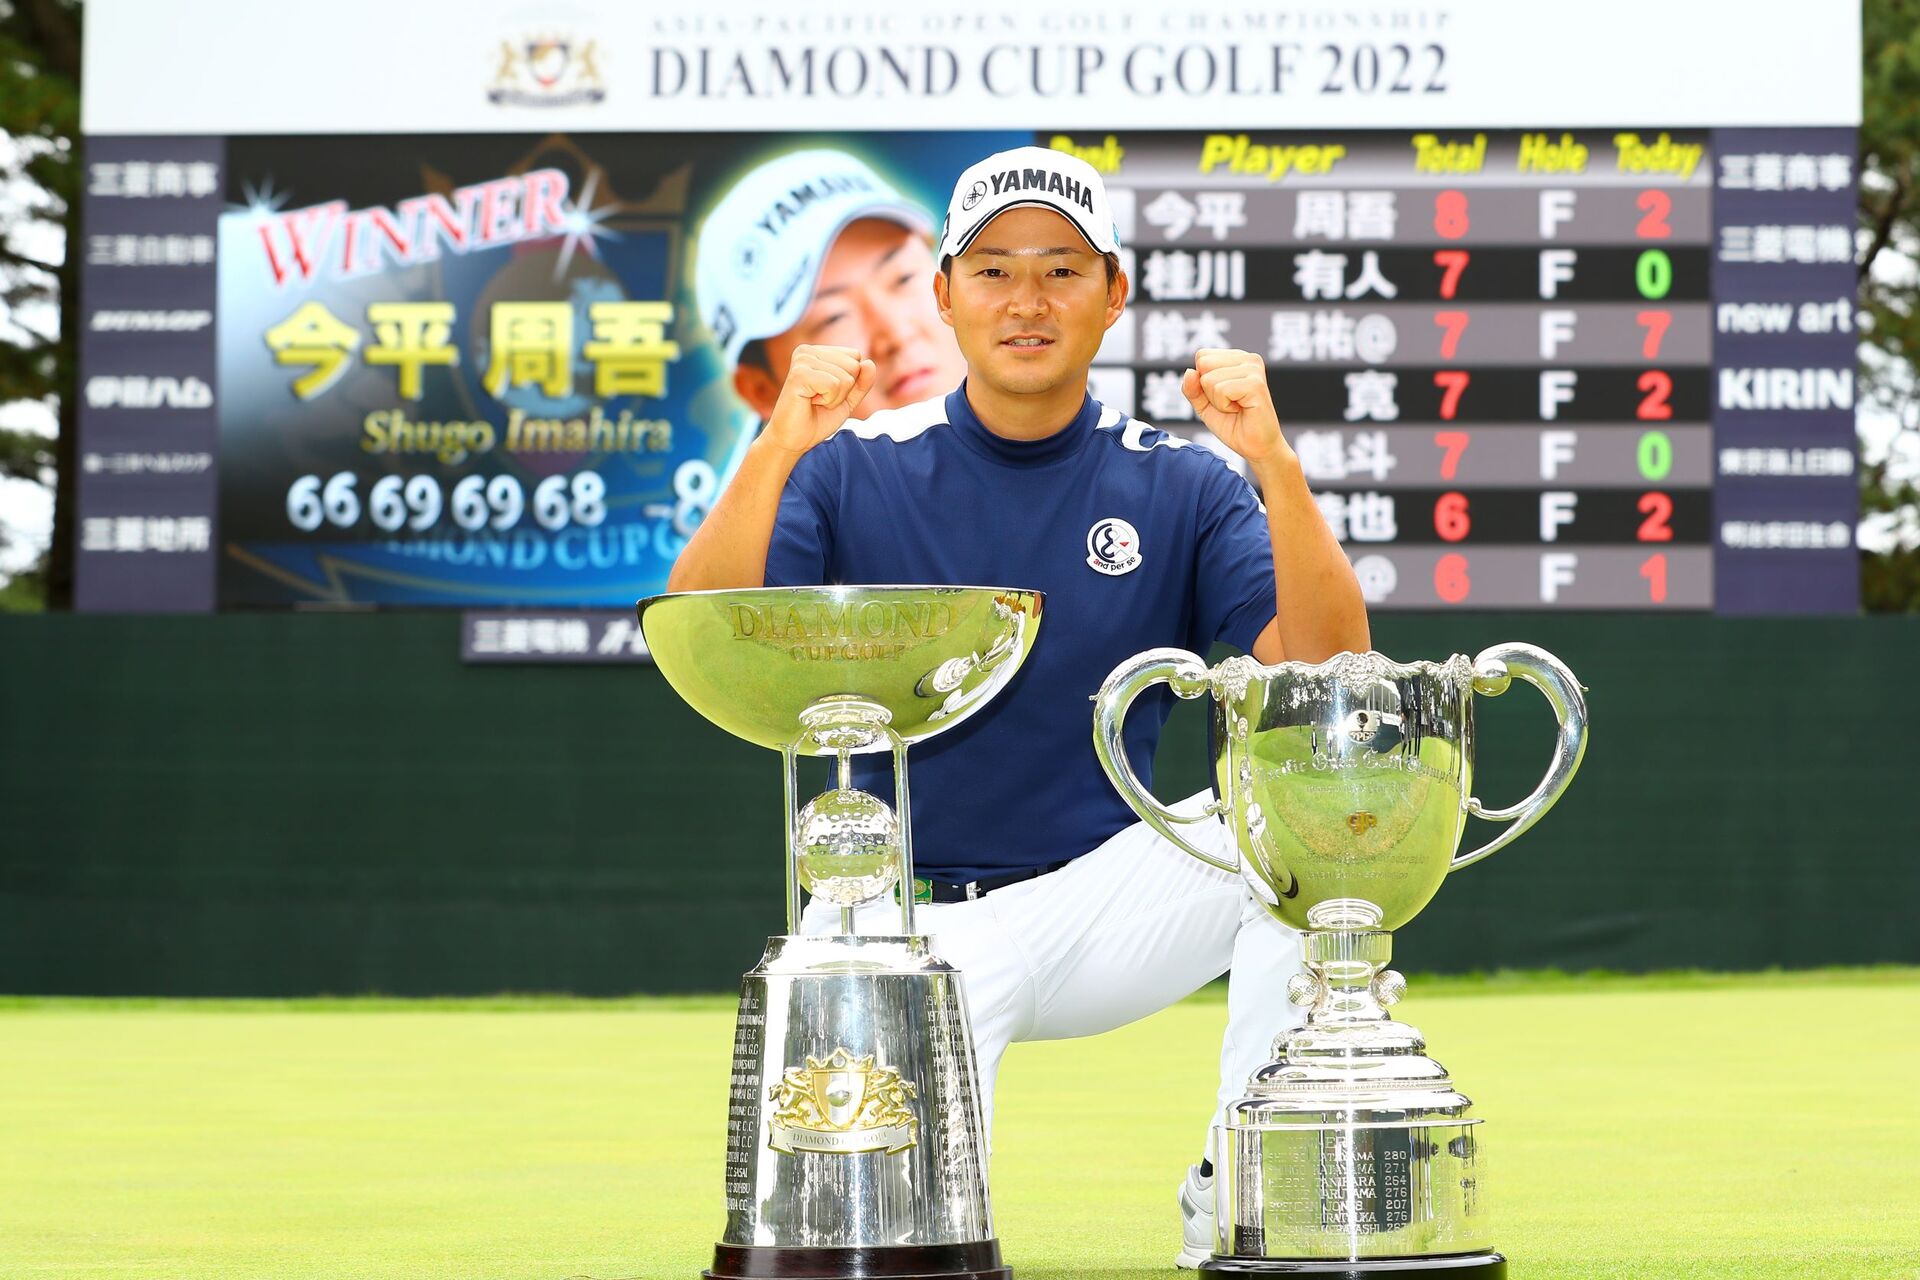 Imahira shines by winning Diamond Cup